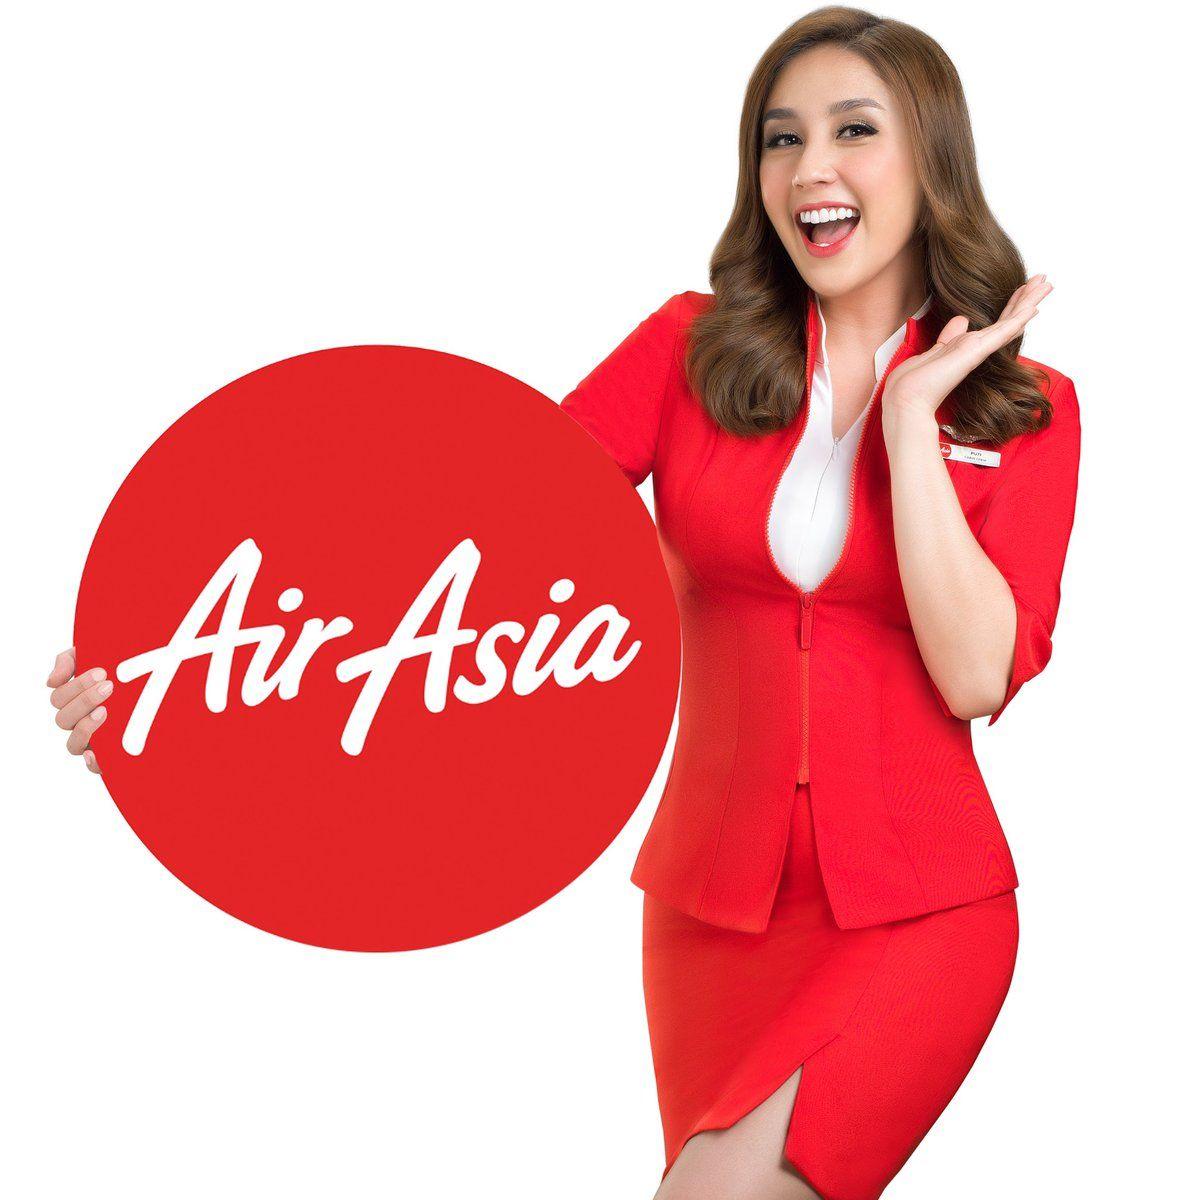 AirAsia Logo - AirAsia kidding. We didn't change our logo! But we